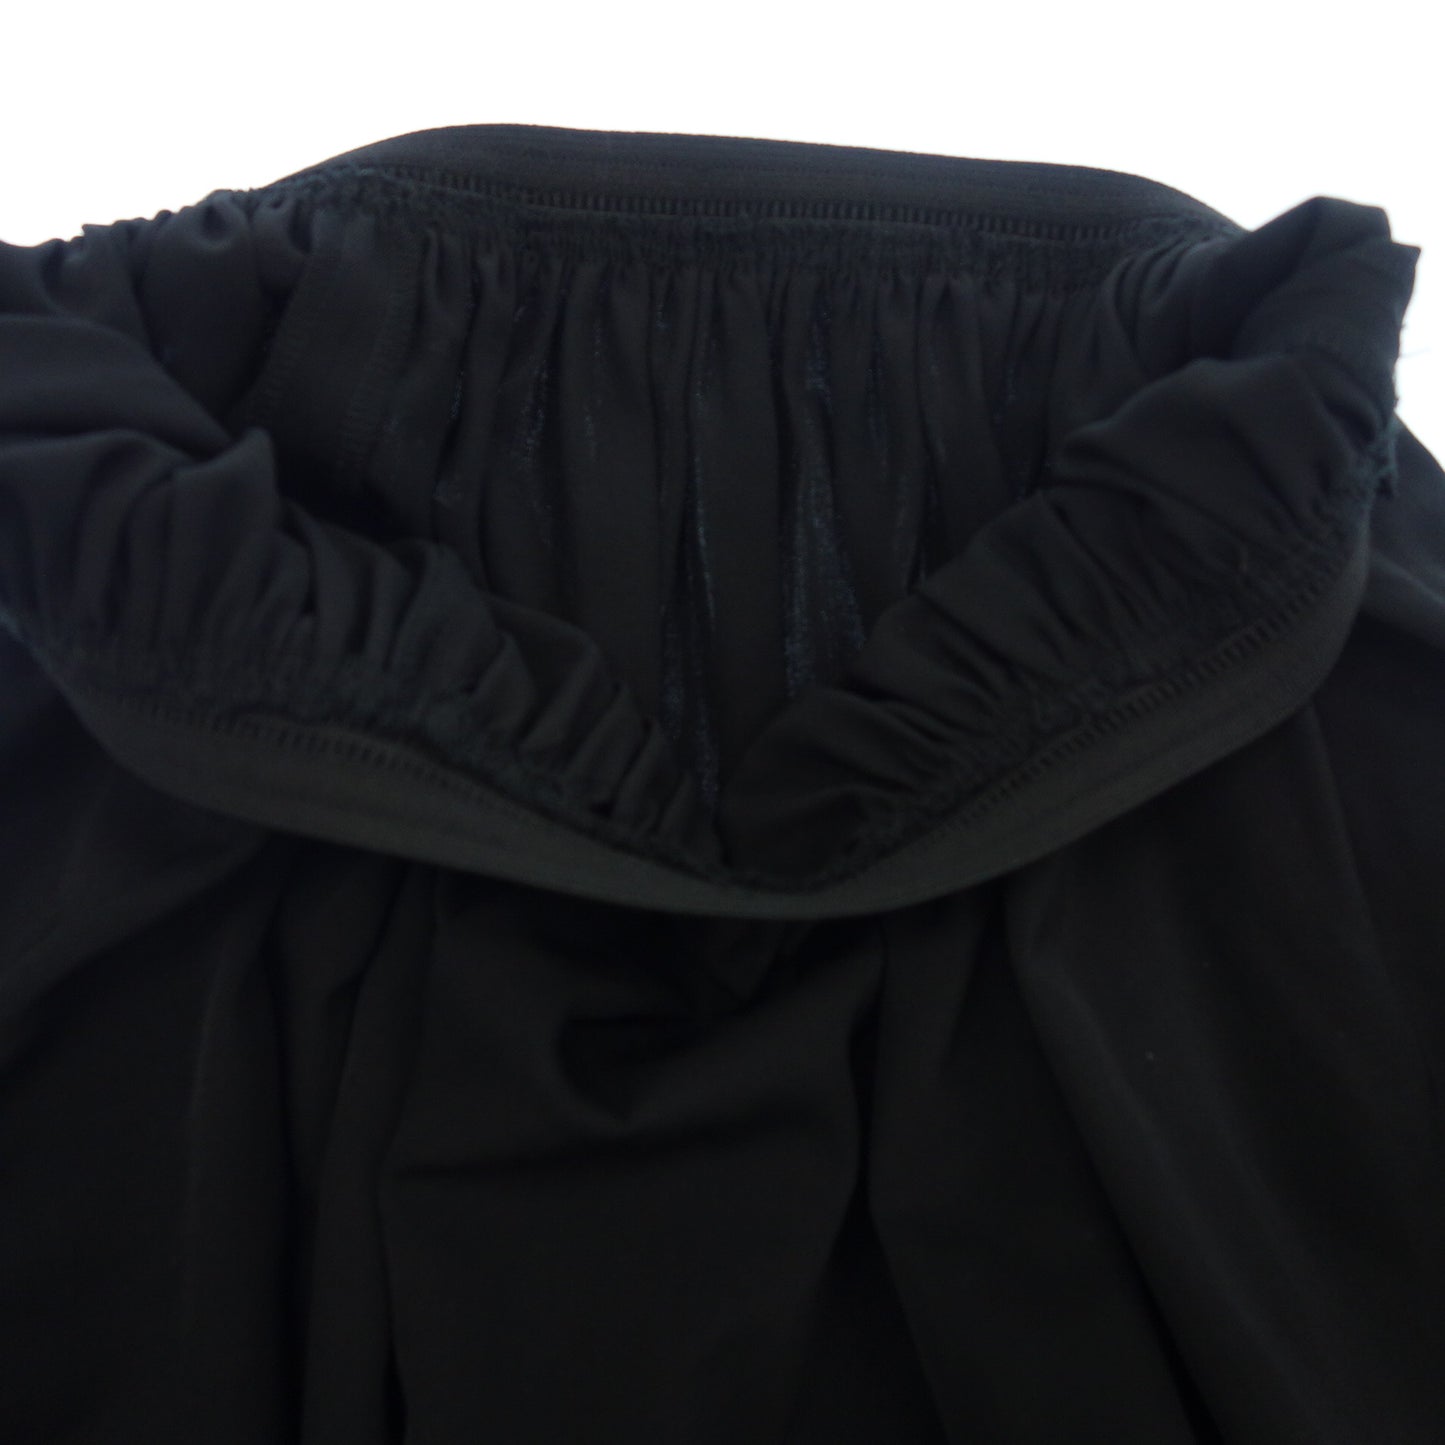 状况非常好 ◆ Yohji Yamamoto 裙子羊毛尼龙切换女式黑色 1 Yohji Yamamoto [AFB49] 